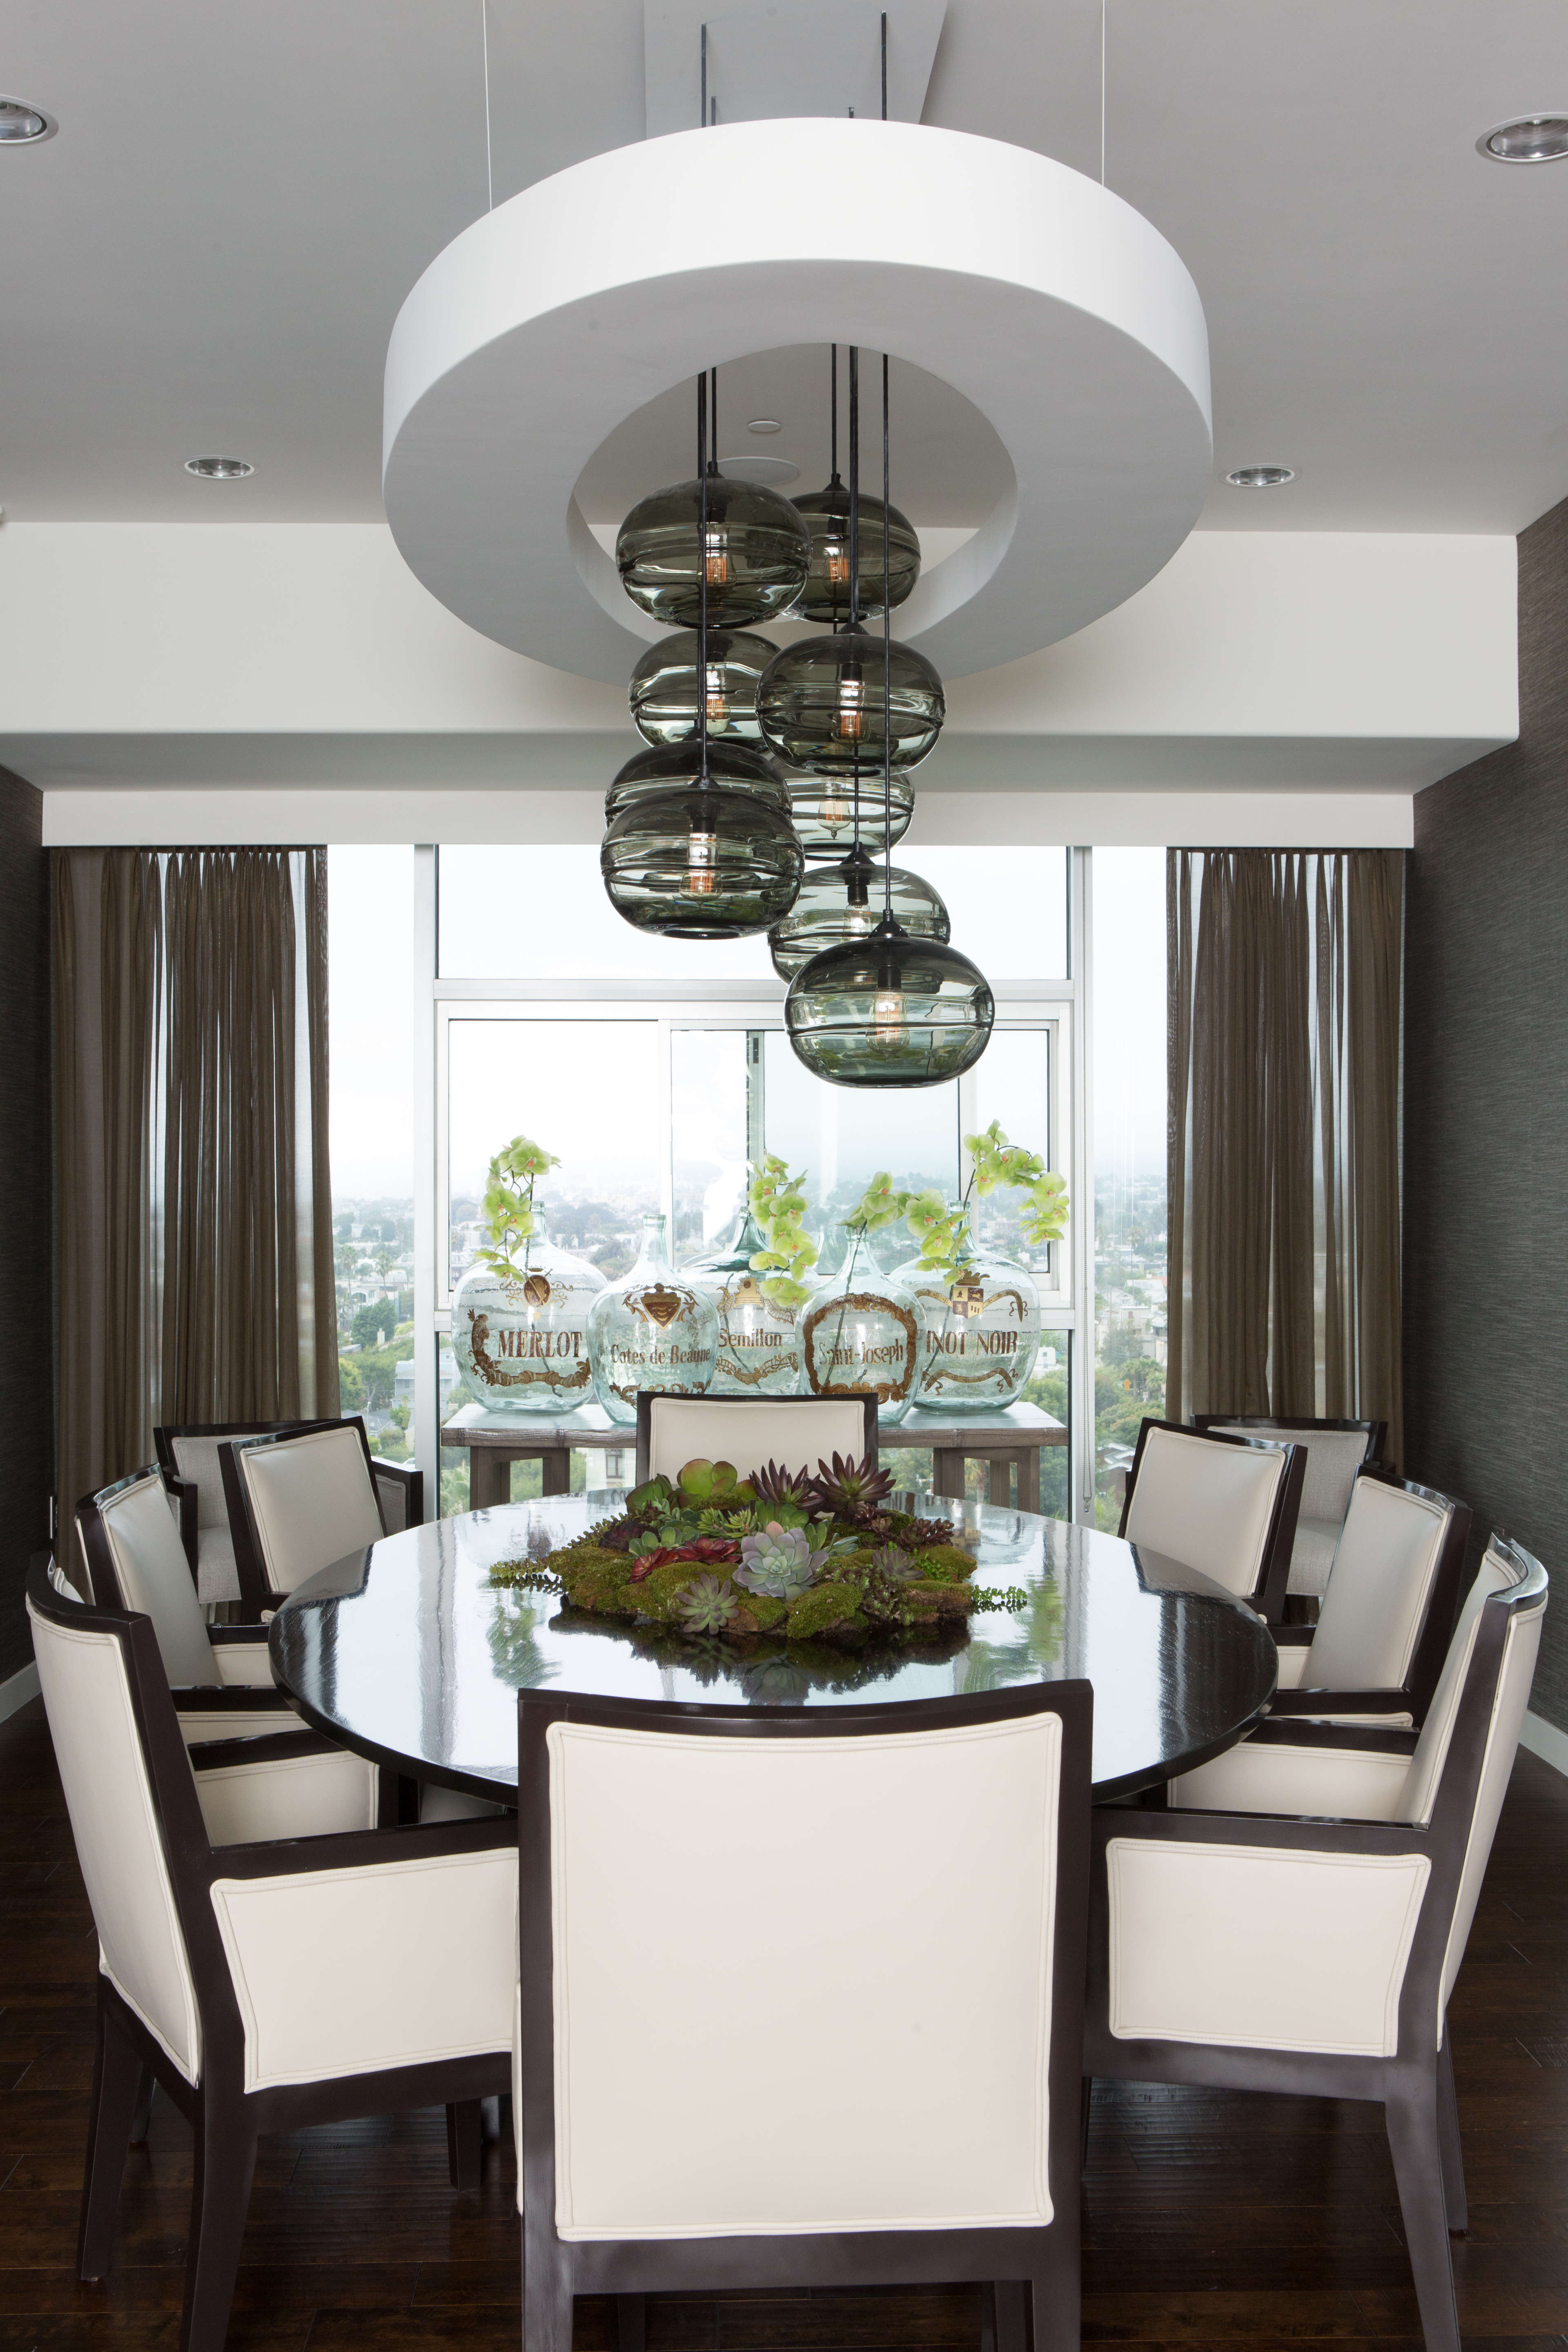 Modern dining room lighting idea chandelier